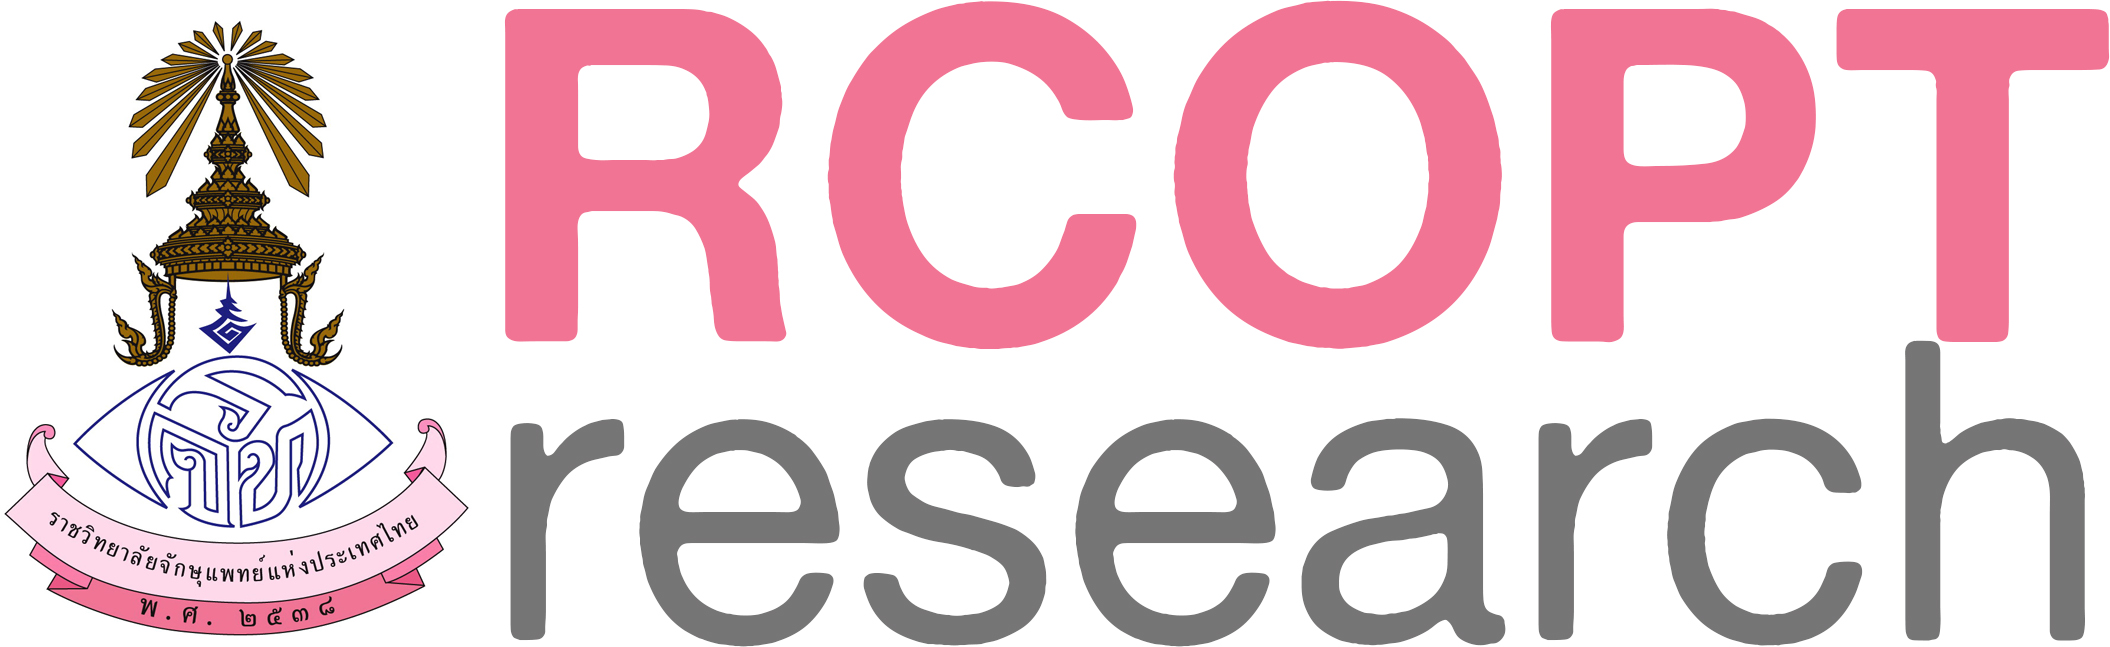 2097RCOPT research logo1.jpg